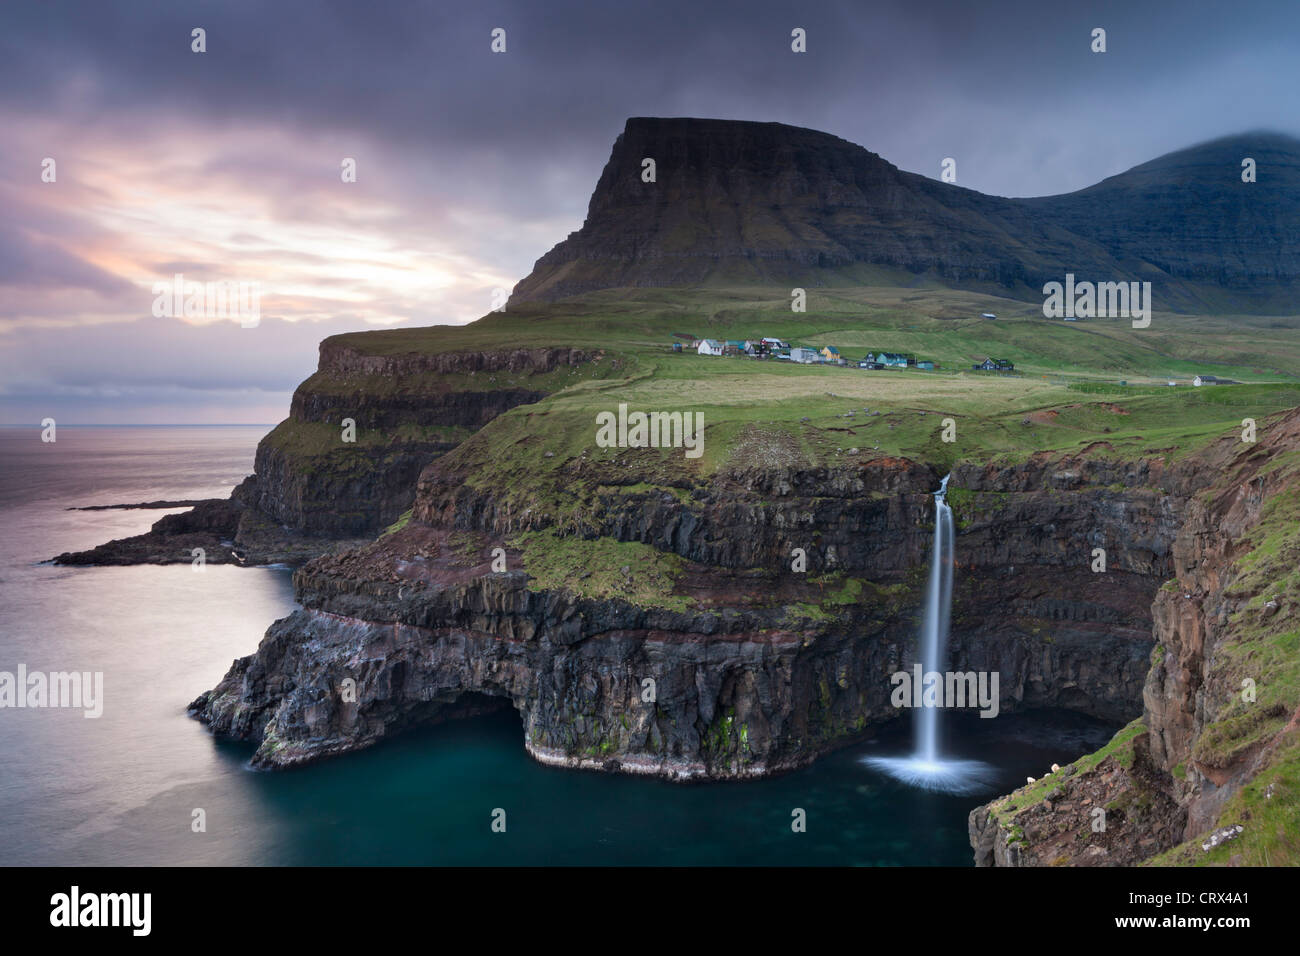 Dramatic coastal scenery at Gasadalur on the island of Vagar, Faroe Islands. Spring (May) 2012. Stock Photo